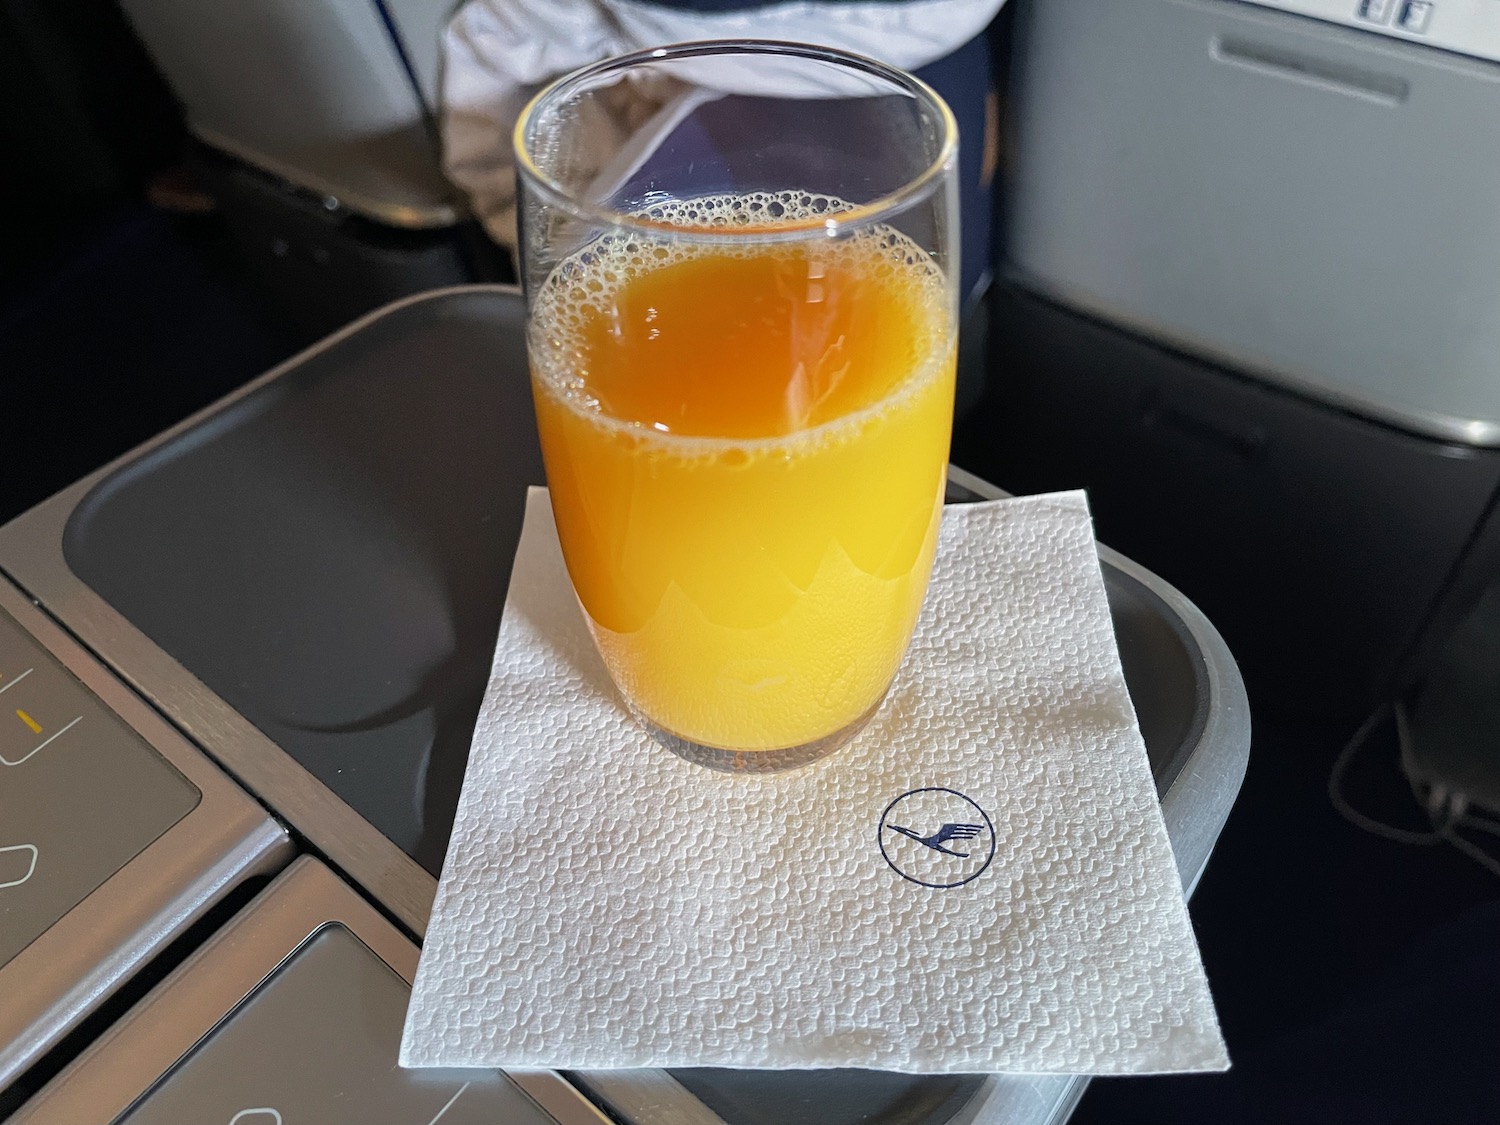 a glass of orange juice on a napkin on a tray